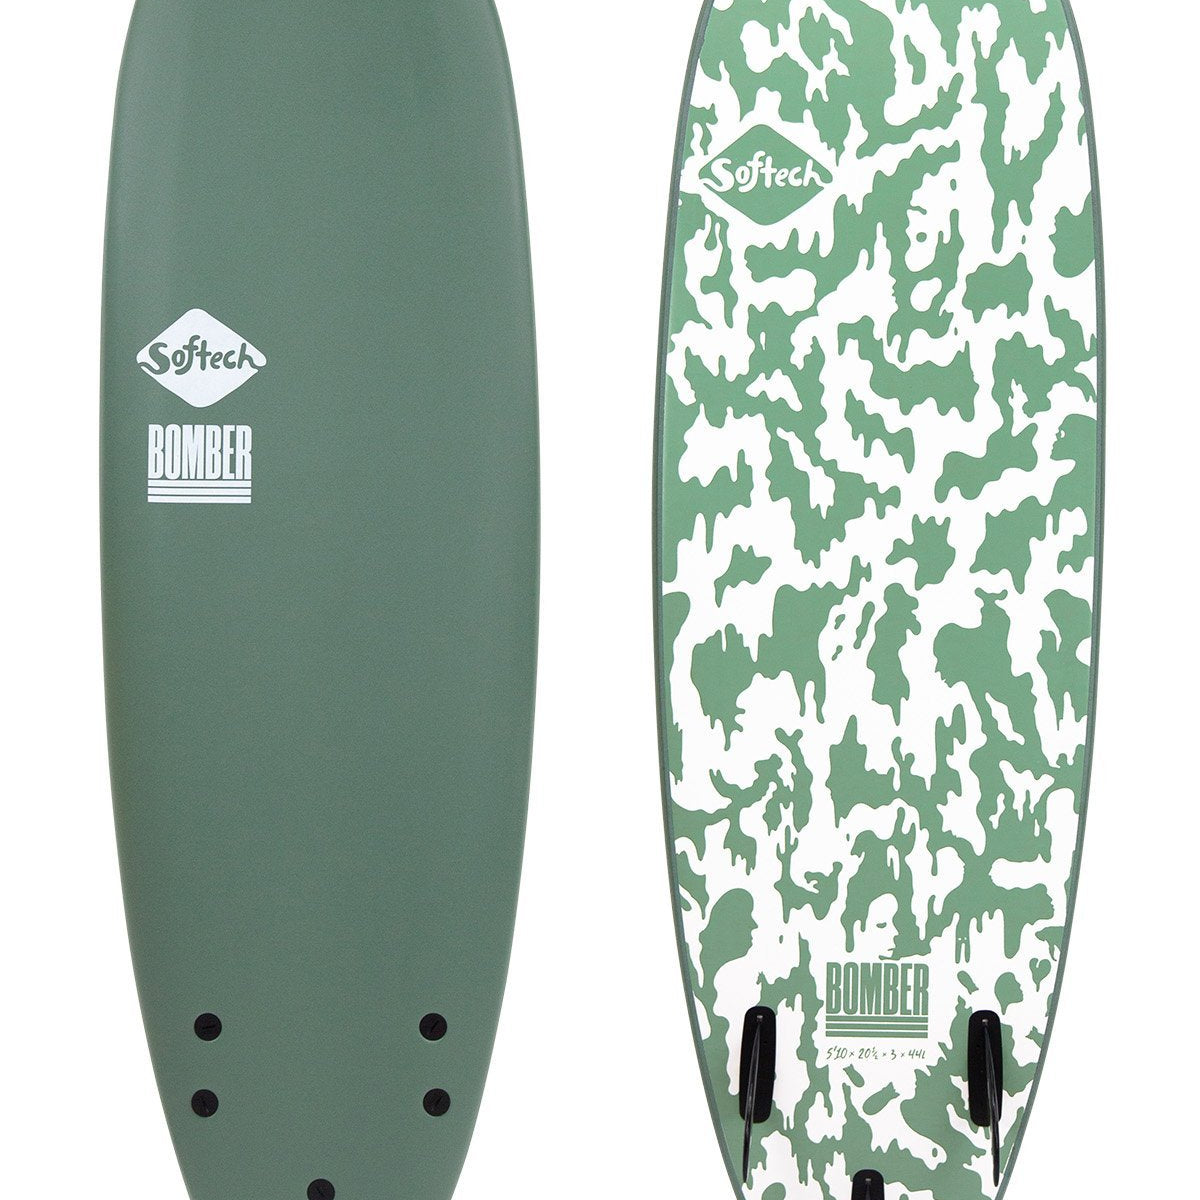 Softech Bomber Soft Surfboard Smoke Green-White 5ft10in